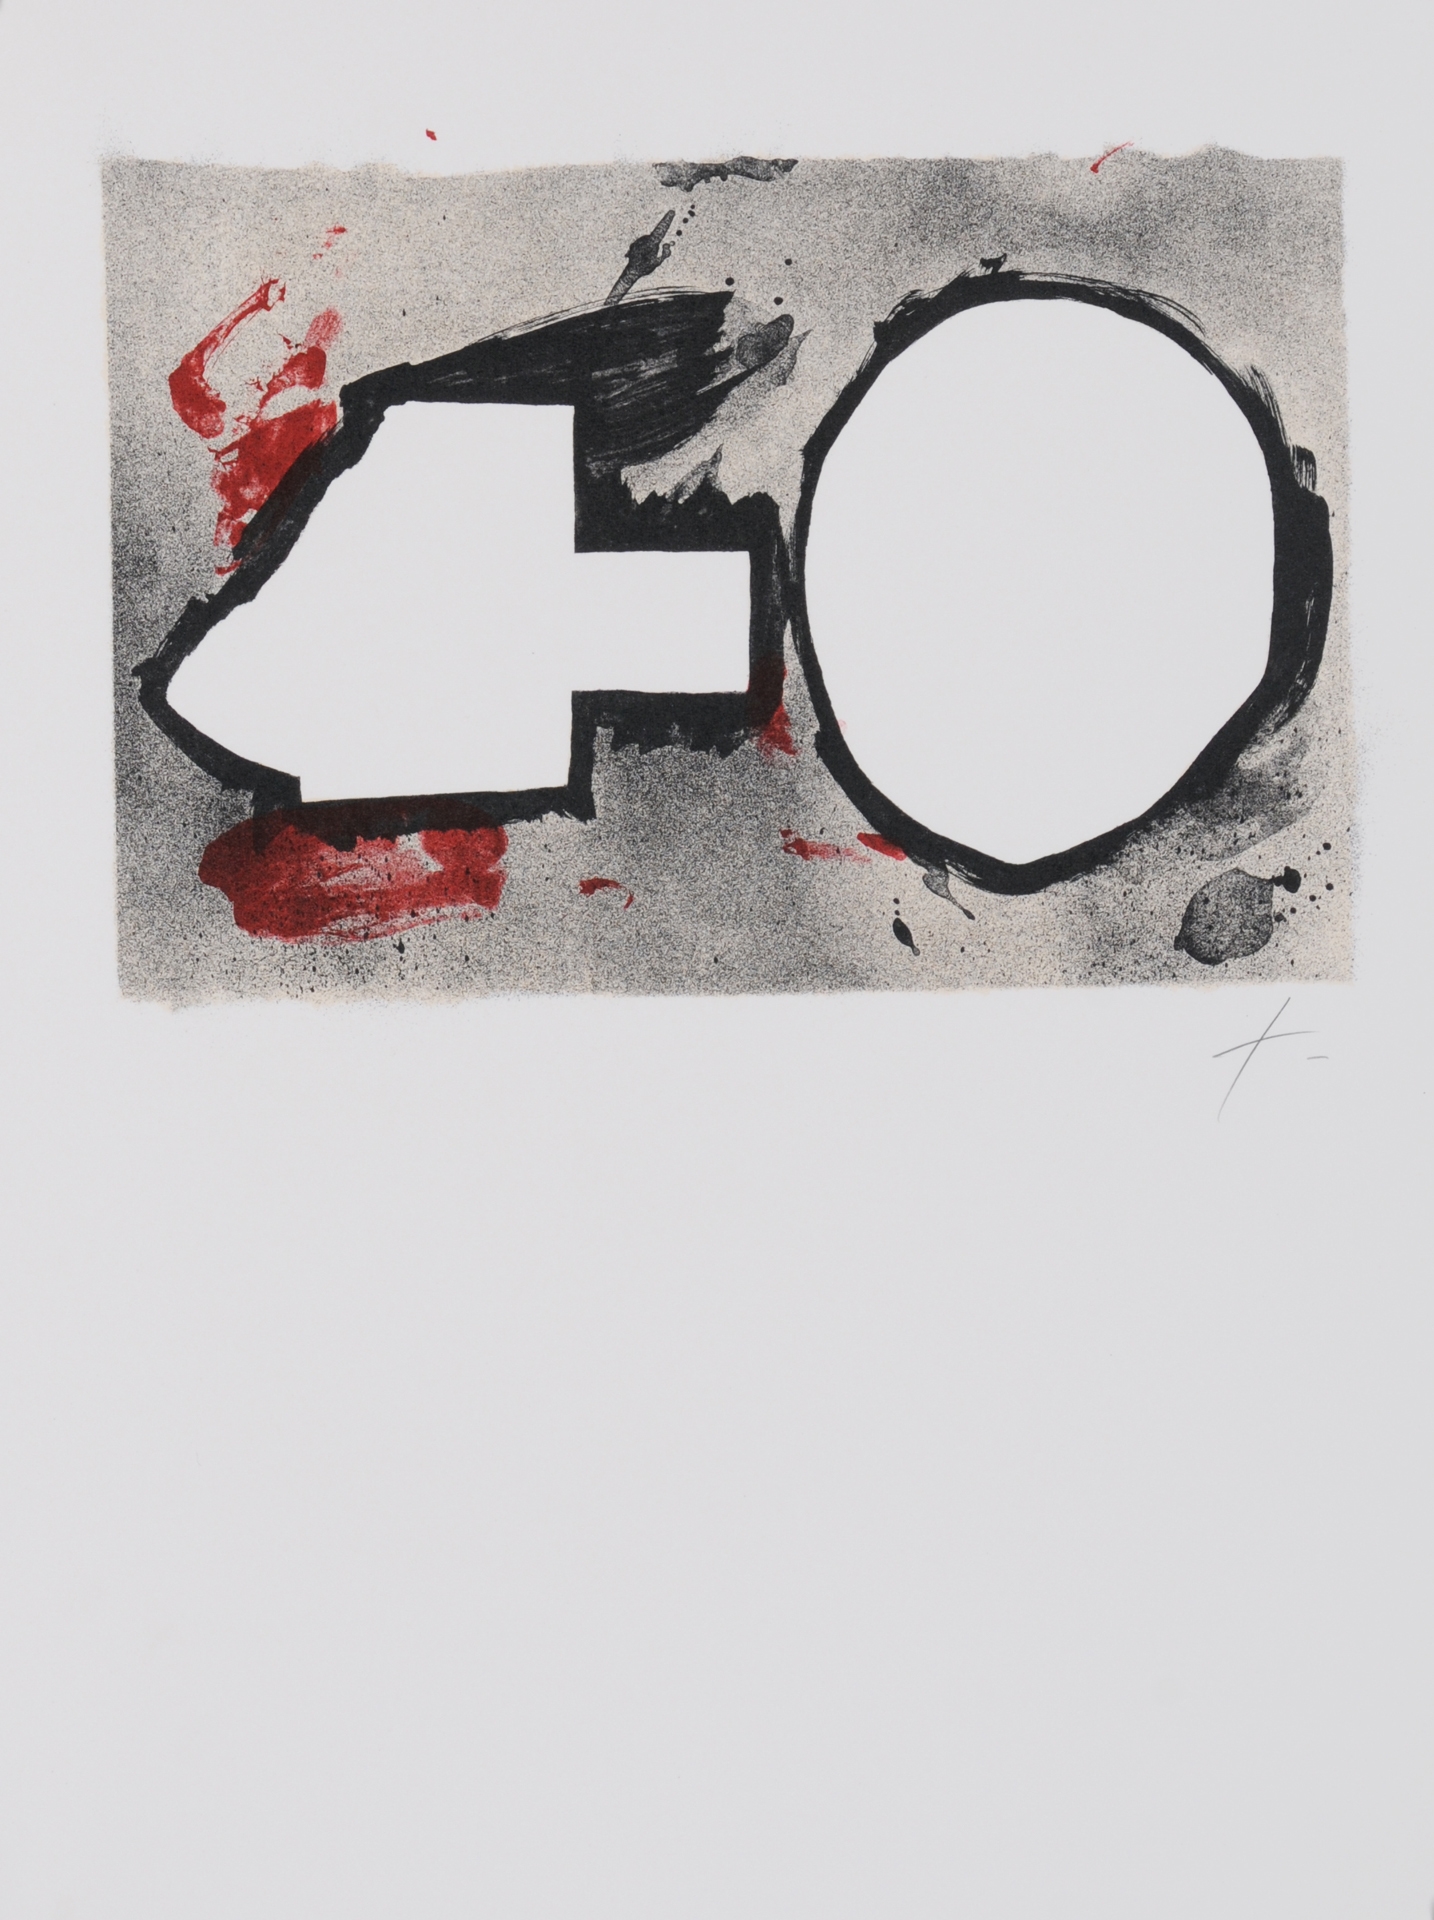 Artwork by Antoni Tàpies, Portfolio.
Sinnieren über Schmutz, Made of lithographs printed in color and